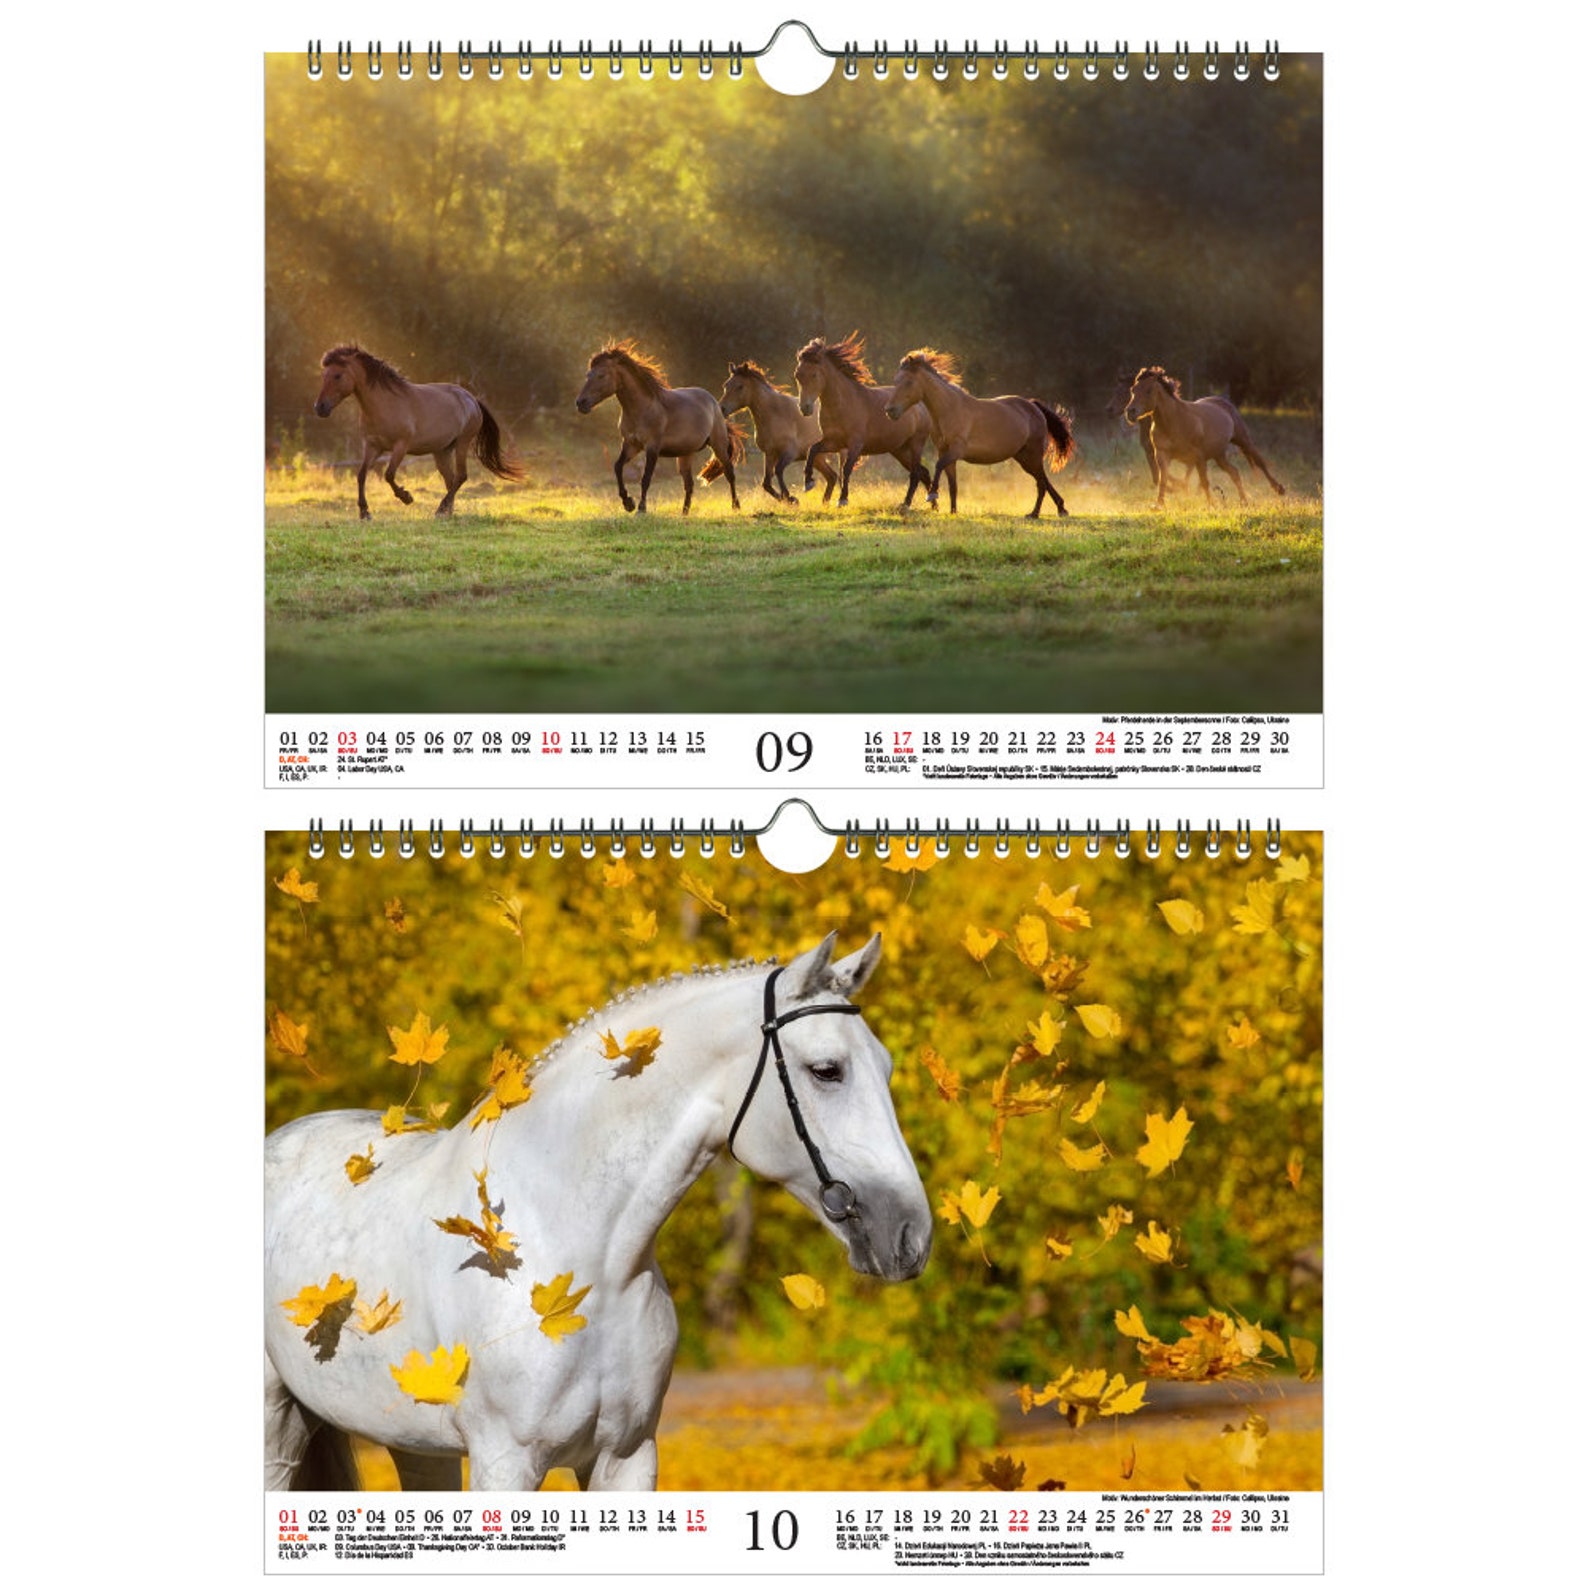 1498 Eur/pcs. Horse Magic DIN A4 Calendar for 2023 Horses and - Etsy